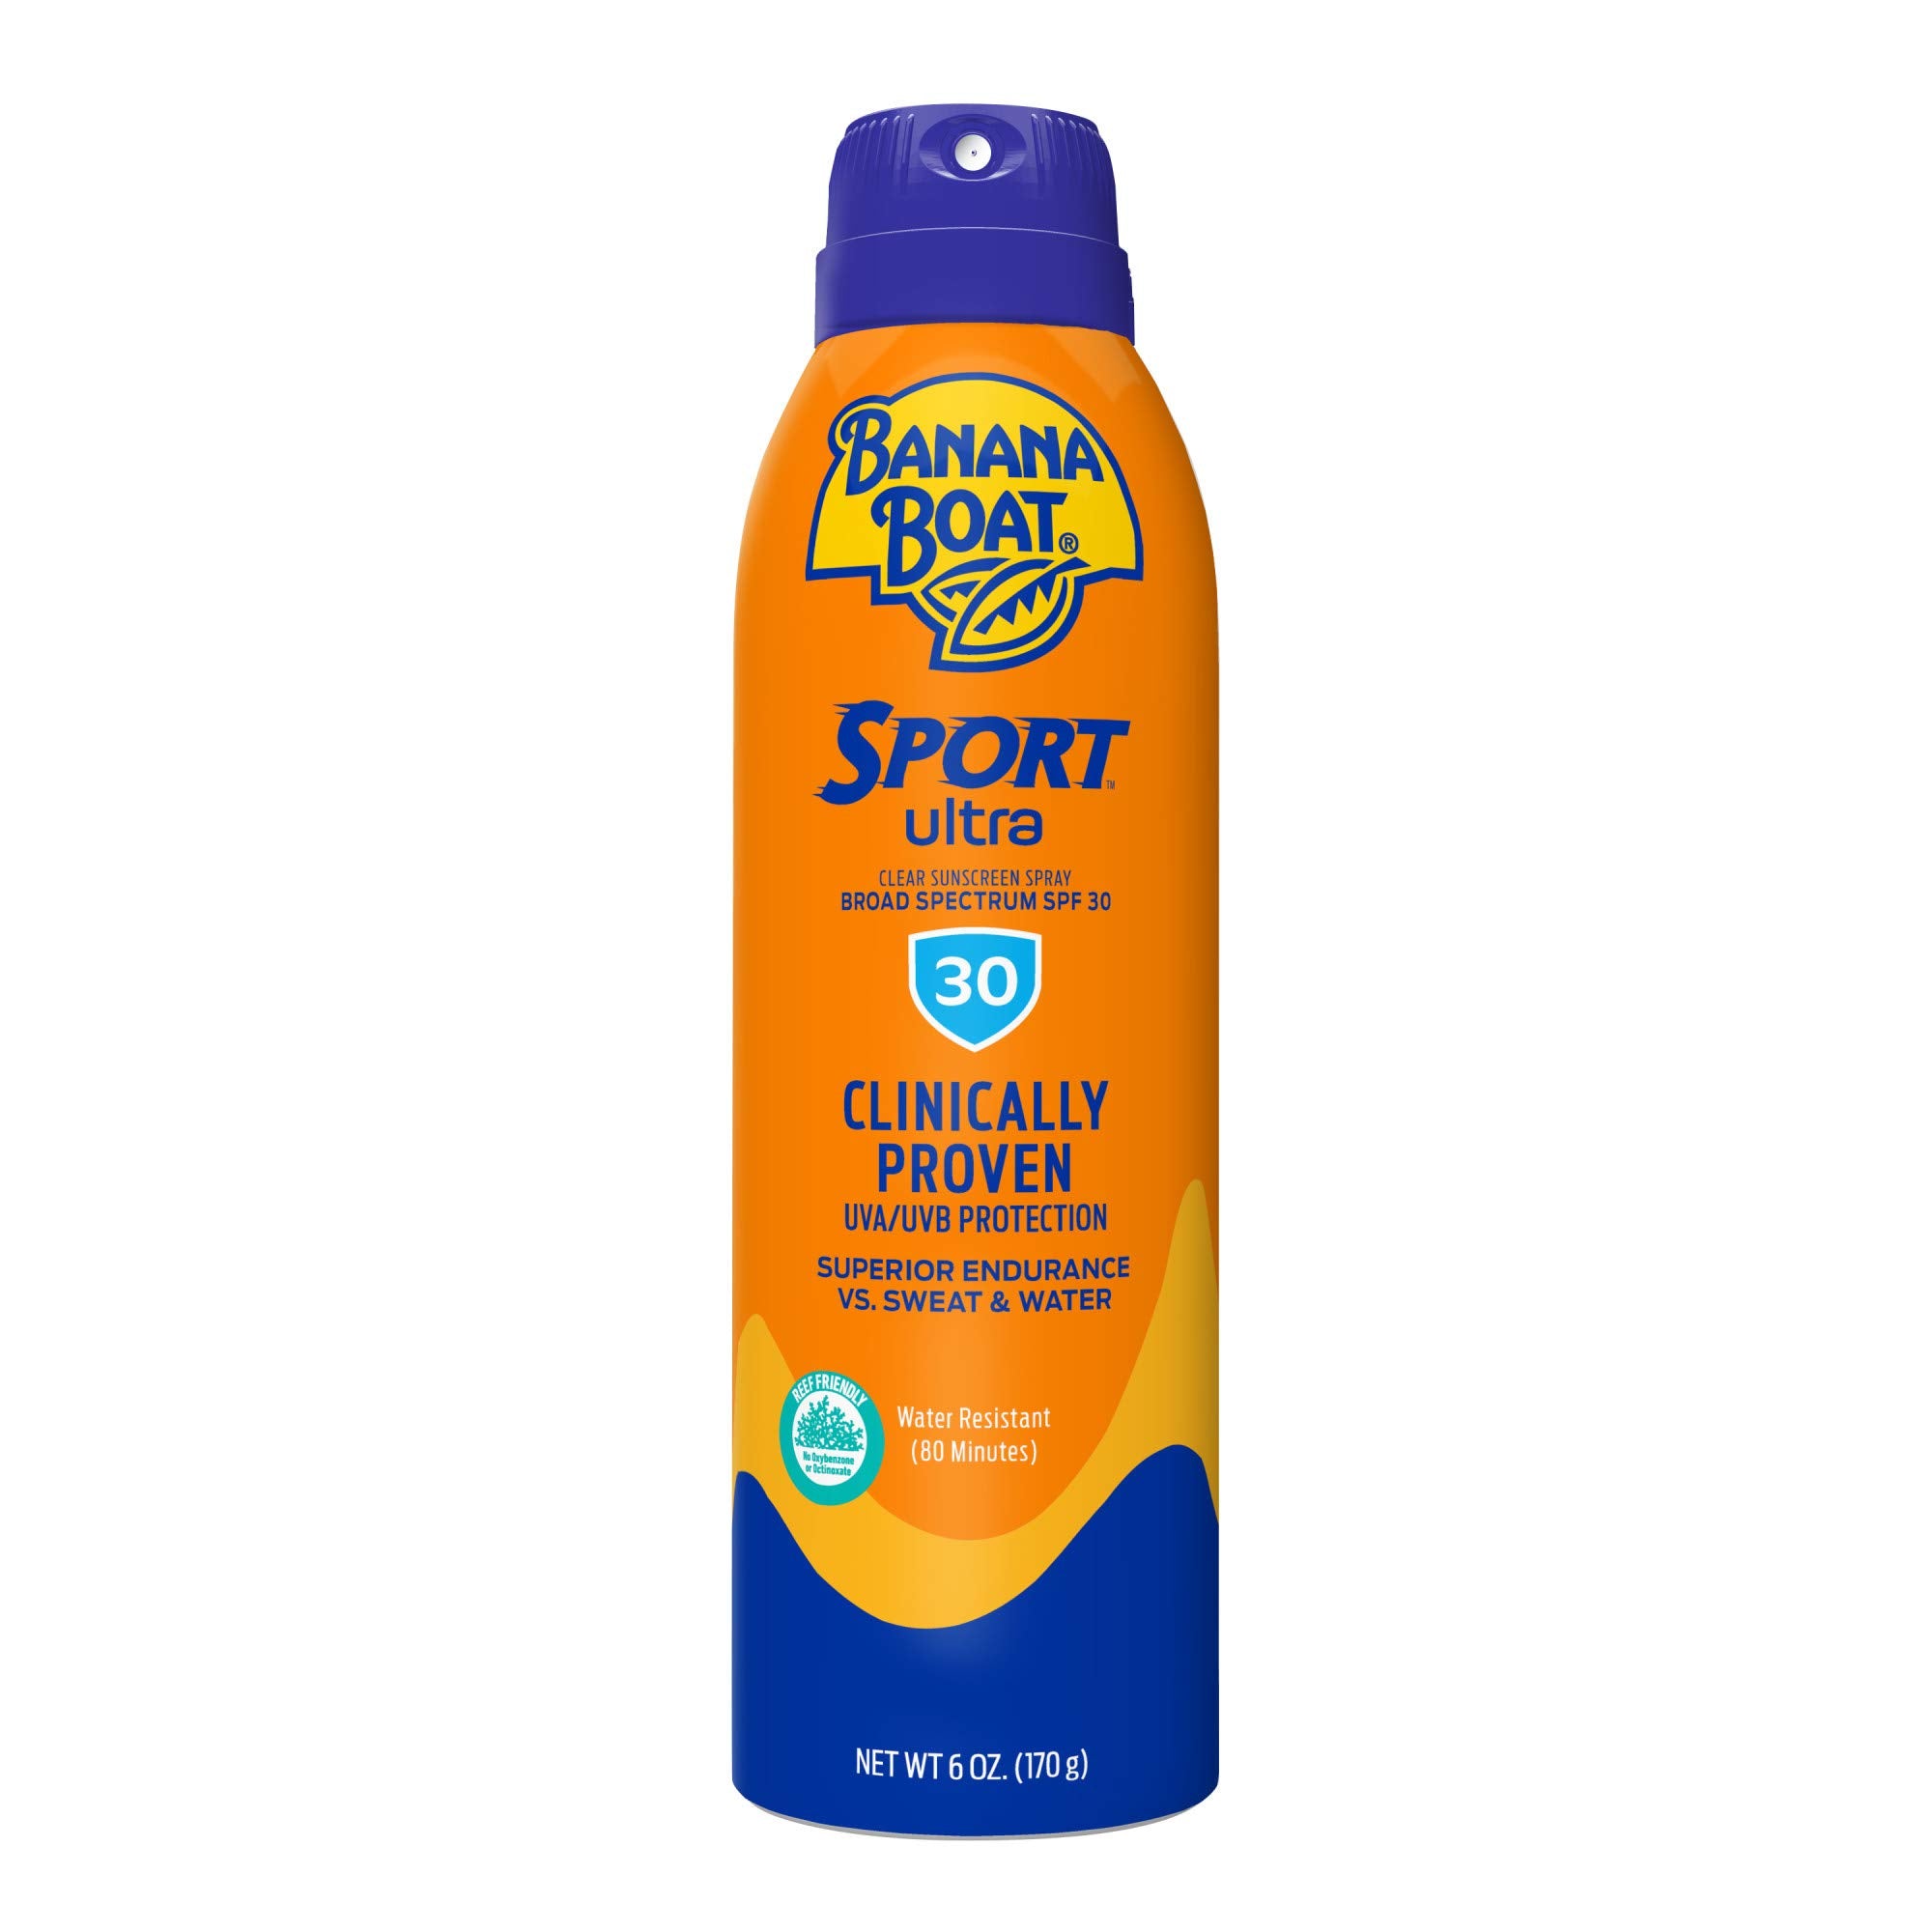 Banana Boat Sport Ultra, Reef Friendly, Broad Spectrum Sunscreen Spray, SPF 30, 6oz.